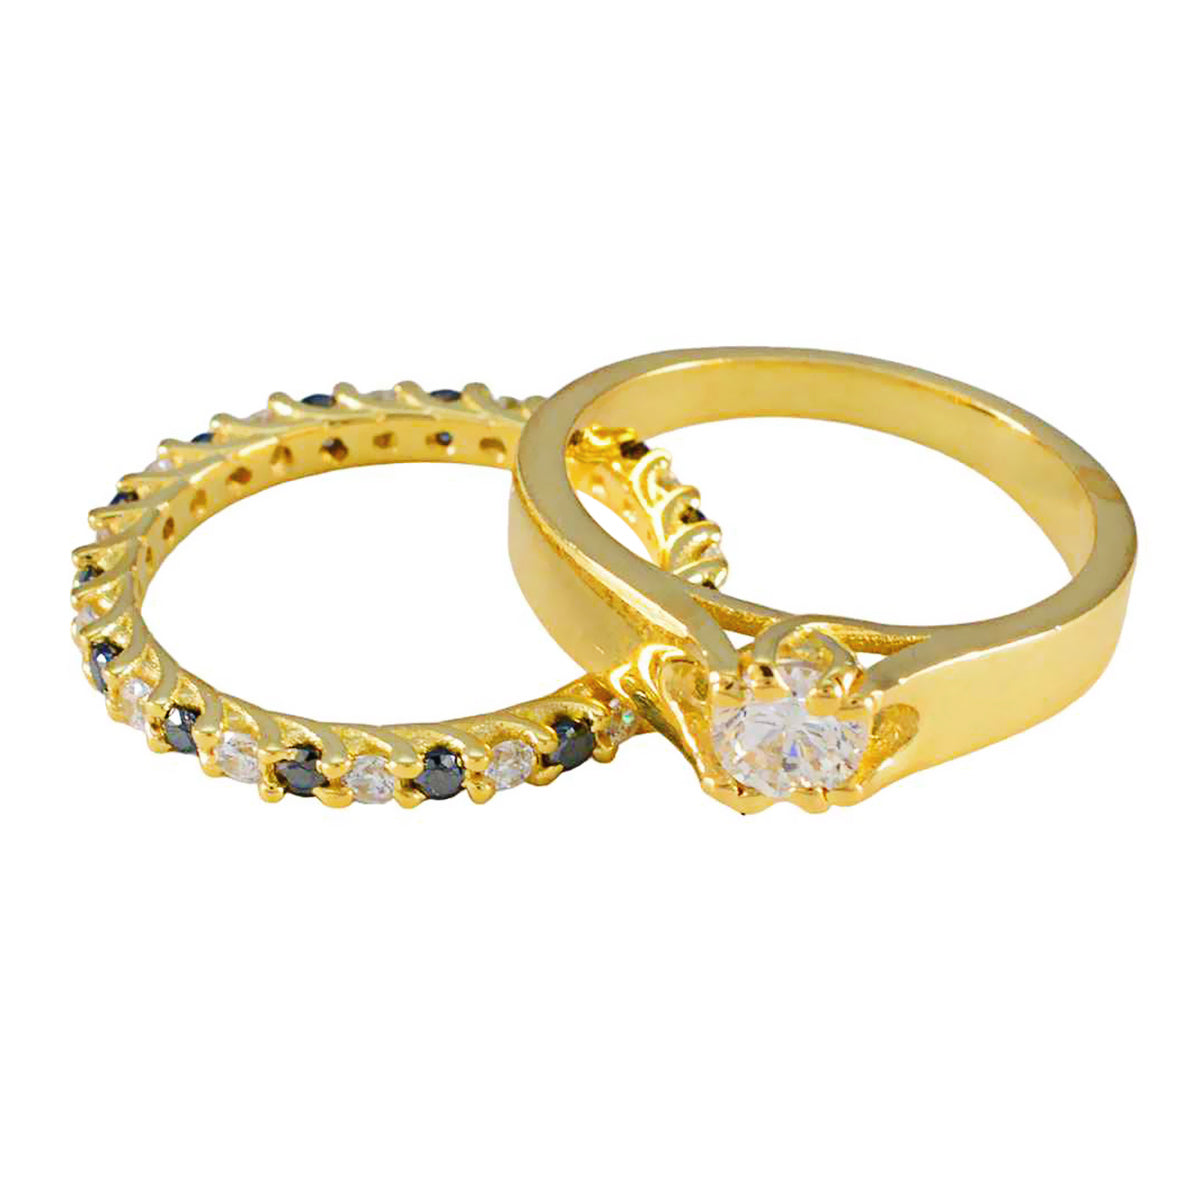 Riyo a granel anillo de plata con chapado en oro amarillo zafiro azul cz piedra forma redonda ajuste de punta anillo de compromiso de joyería nupcial